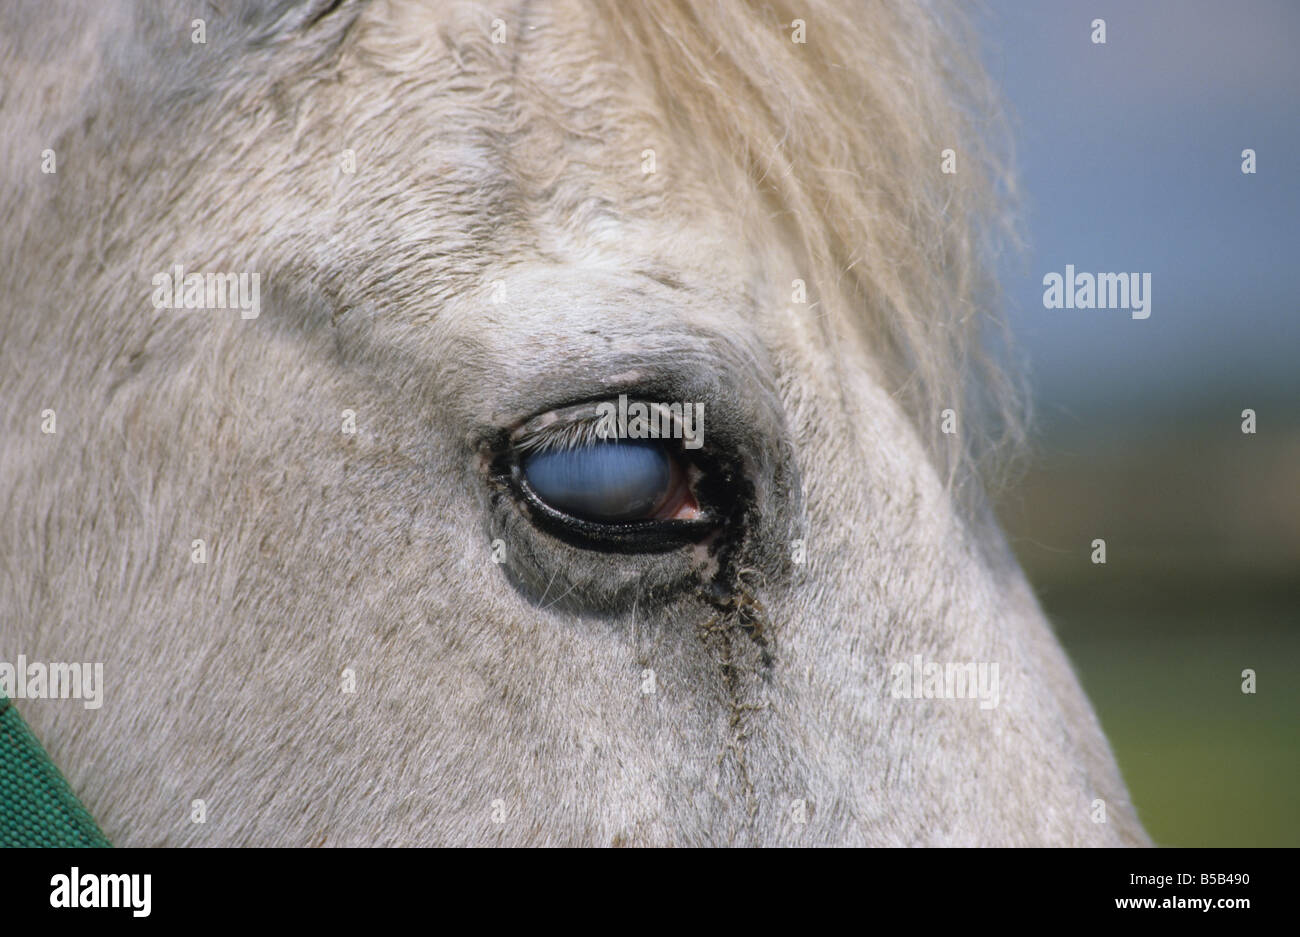 Eye of a blind horse (Equus caballus) Stock Photo